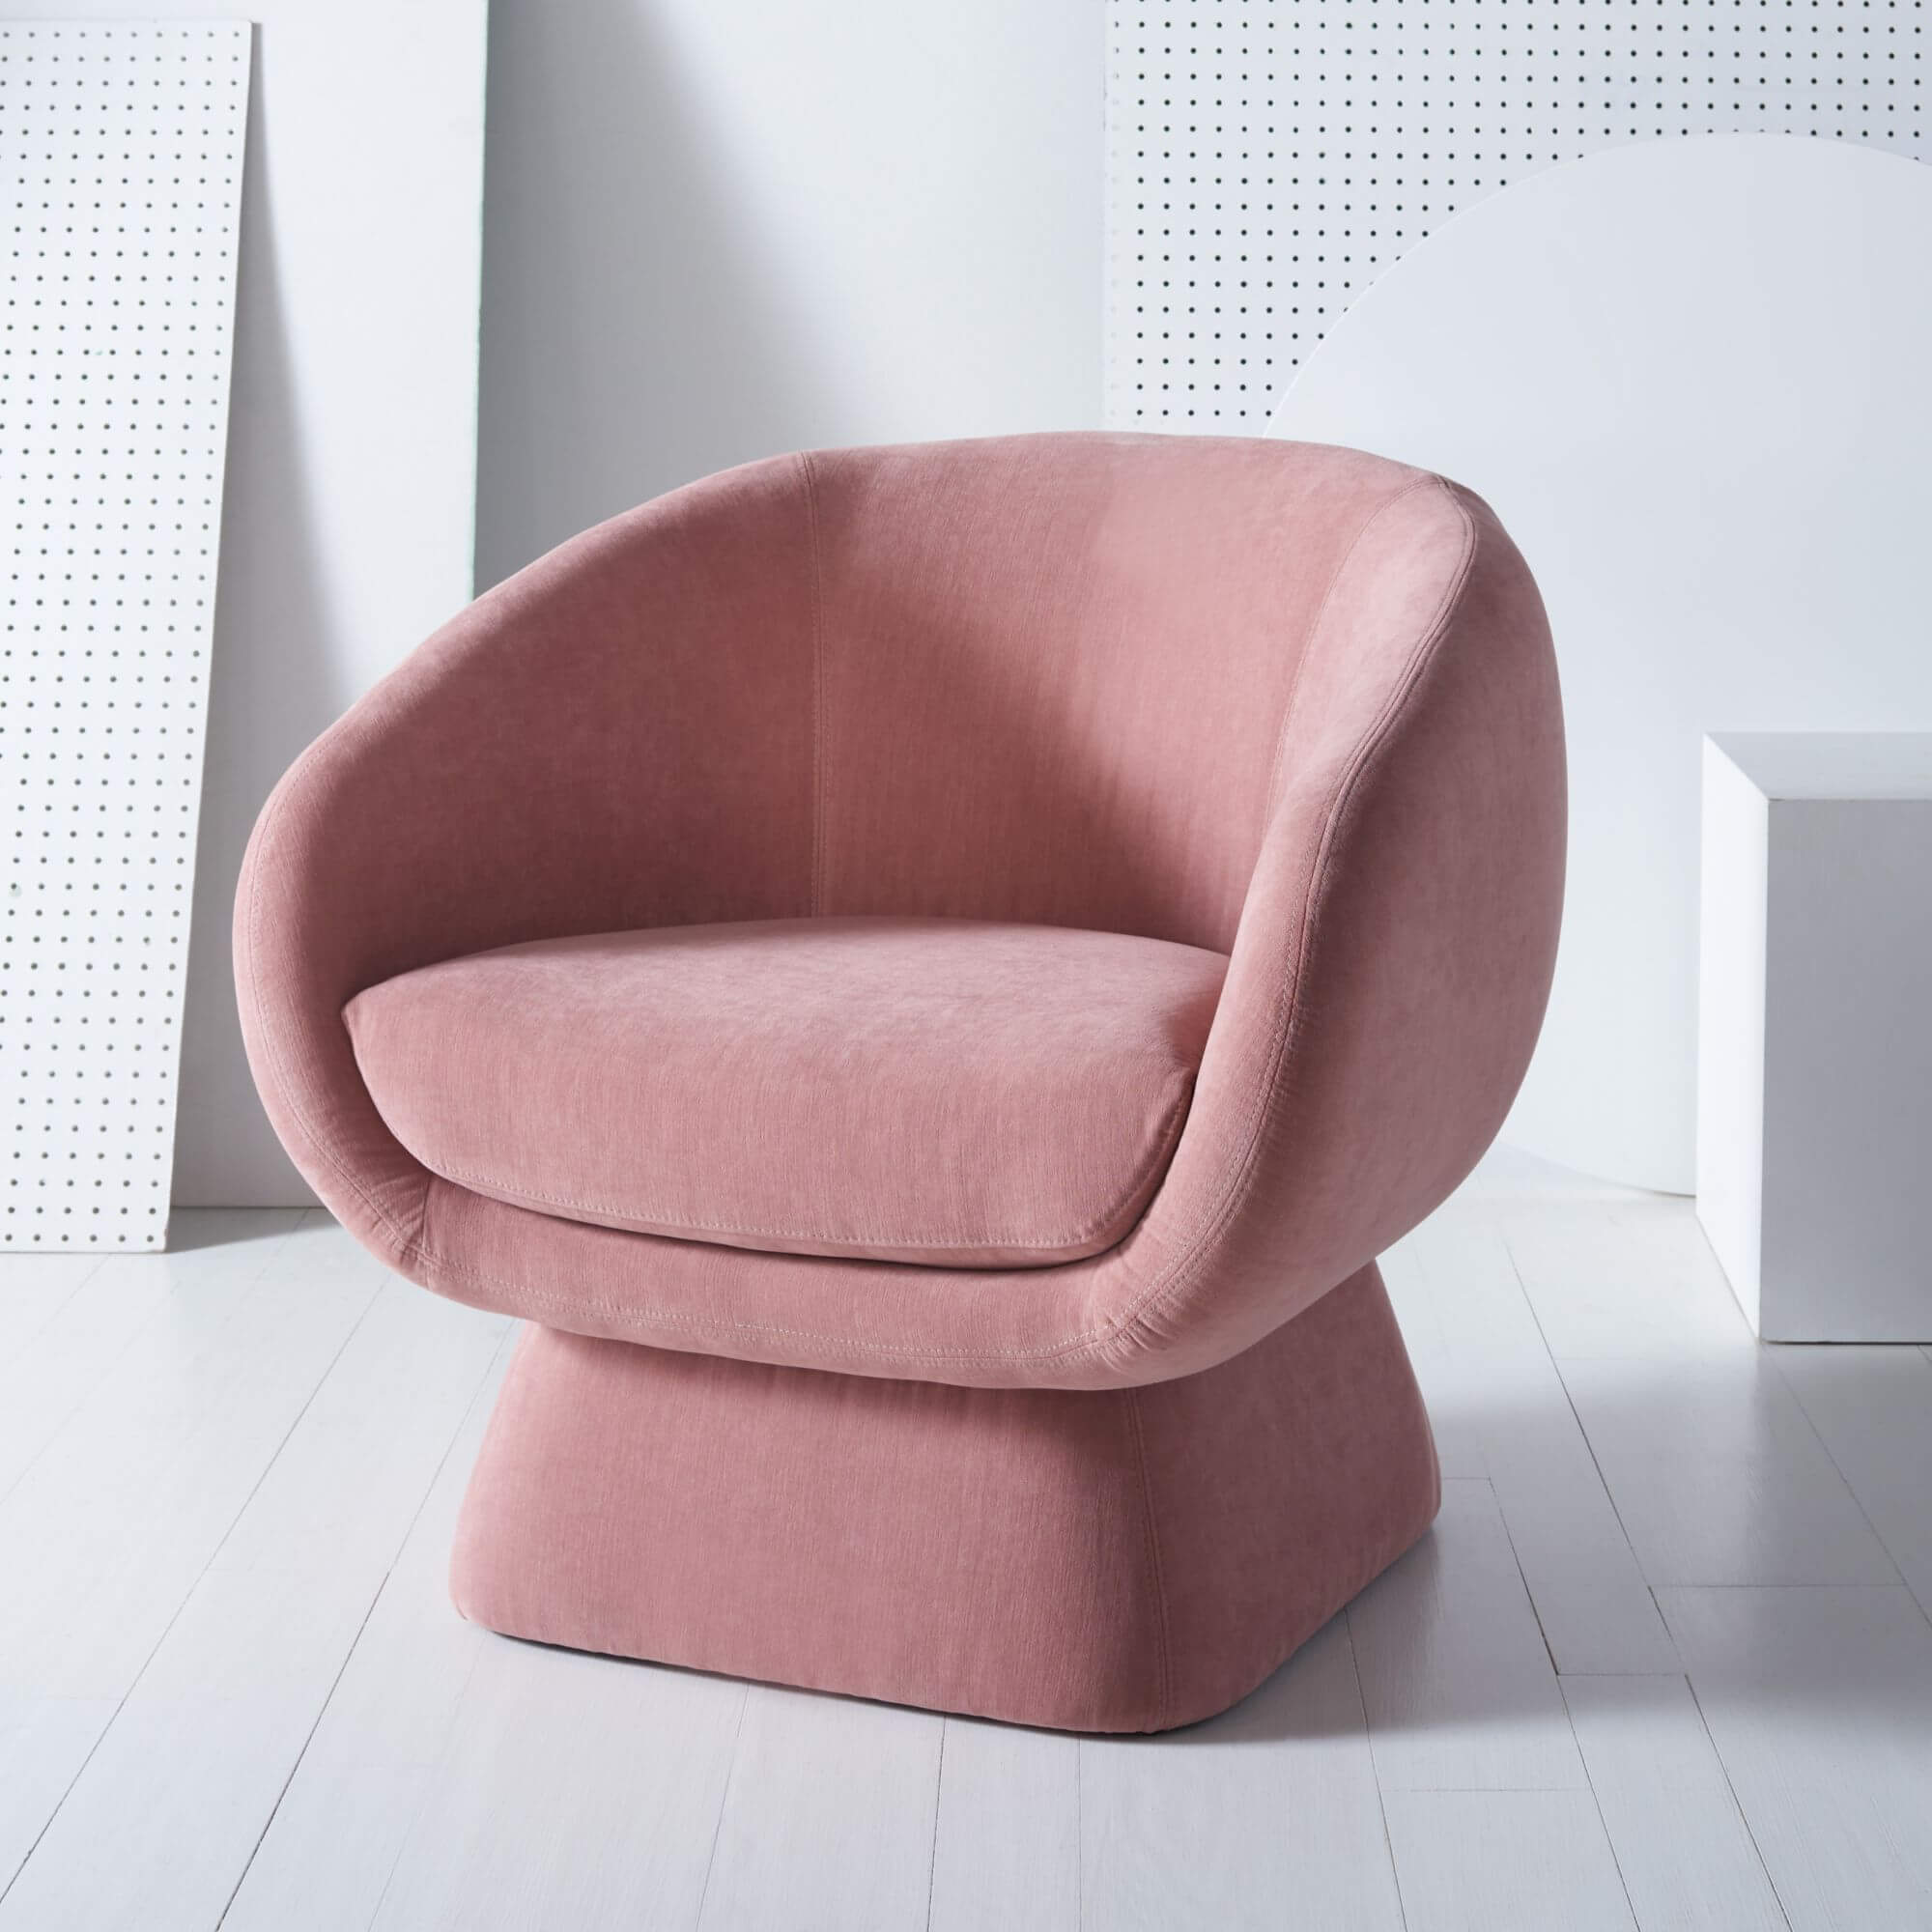 Eleazer Modern Accent Chair - Dusty Rose